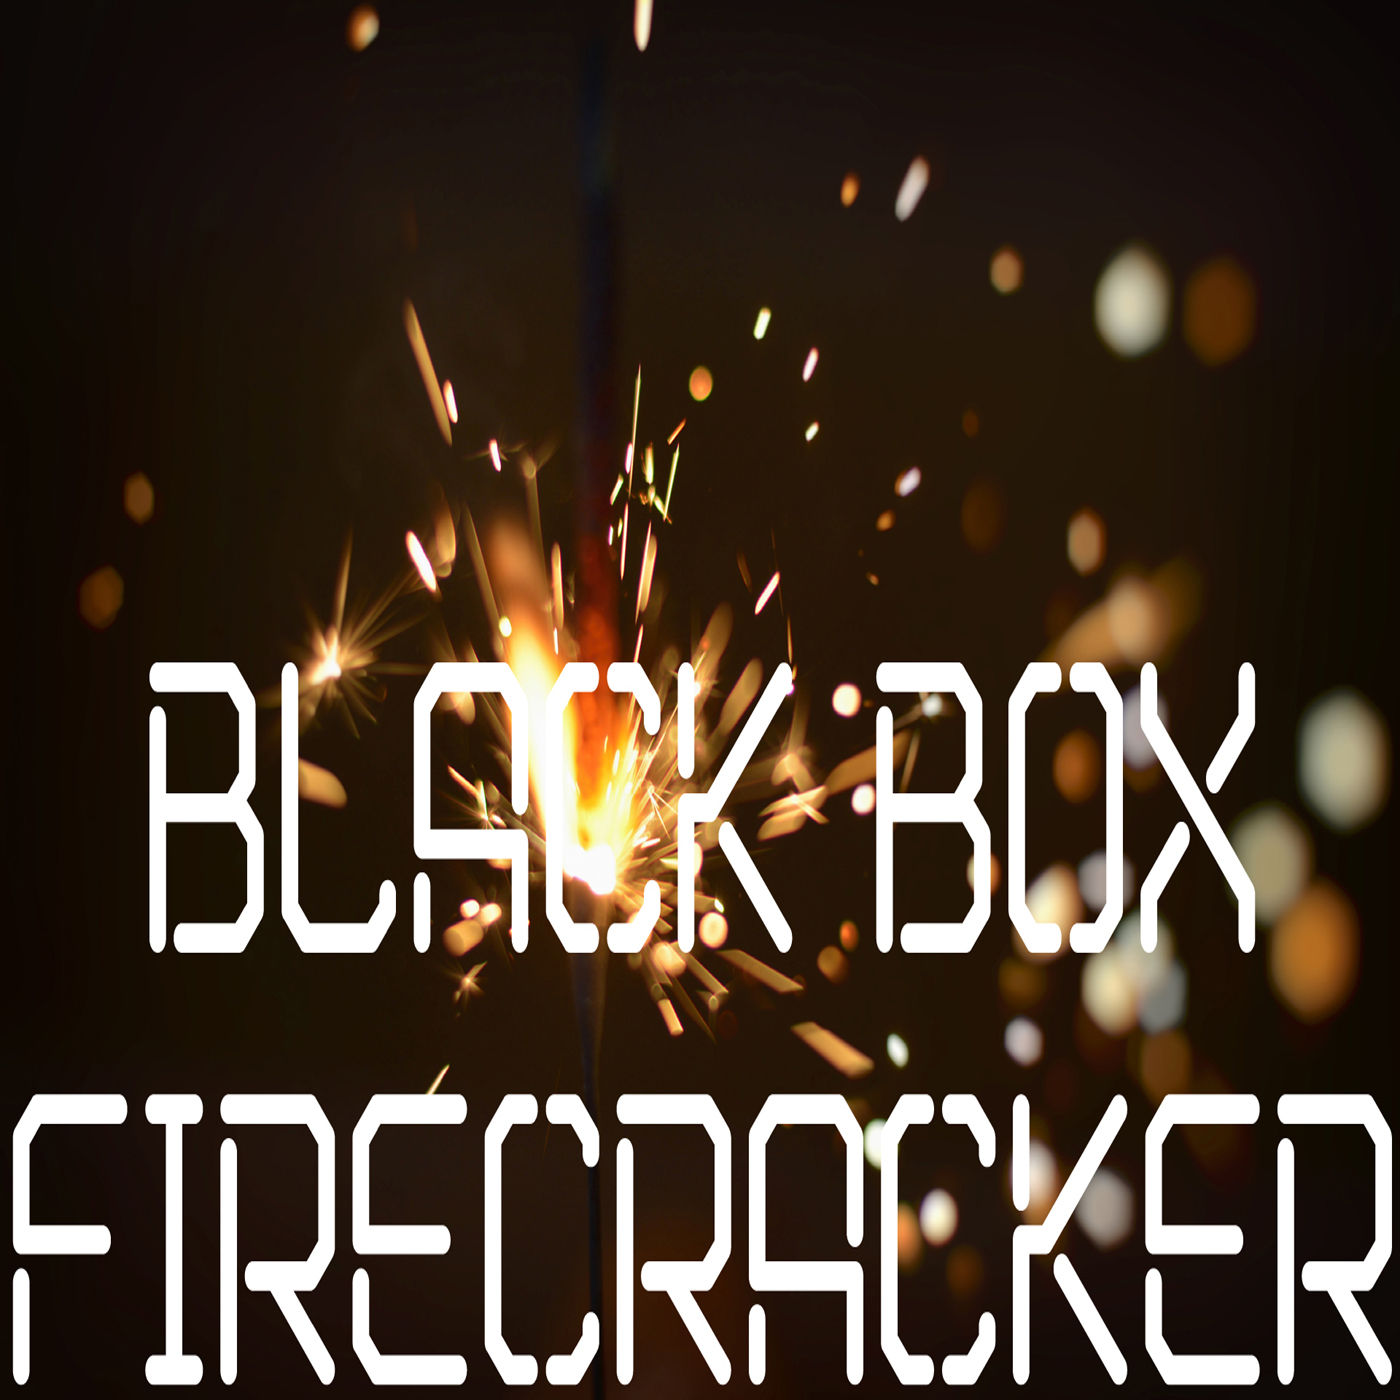 BLACK BOX - Firecracker(유머, 신남, 비트, 즐거움, 흥겨움, 클럽, 흥함, 활기, 행복, 일렉)